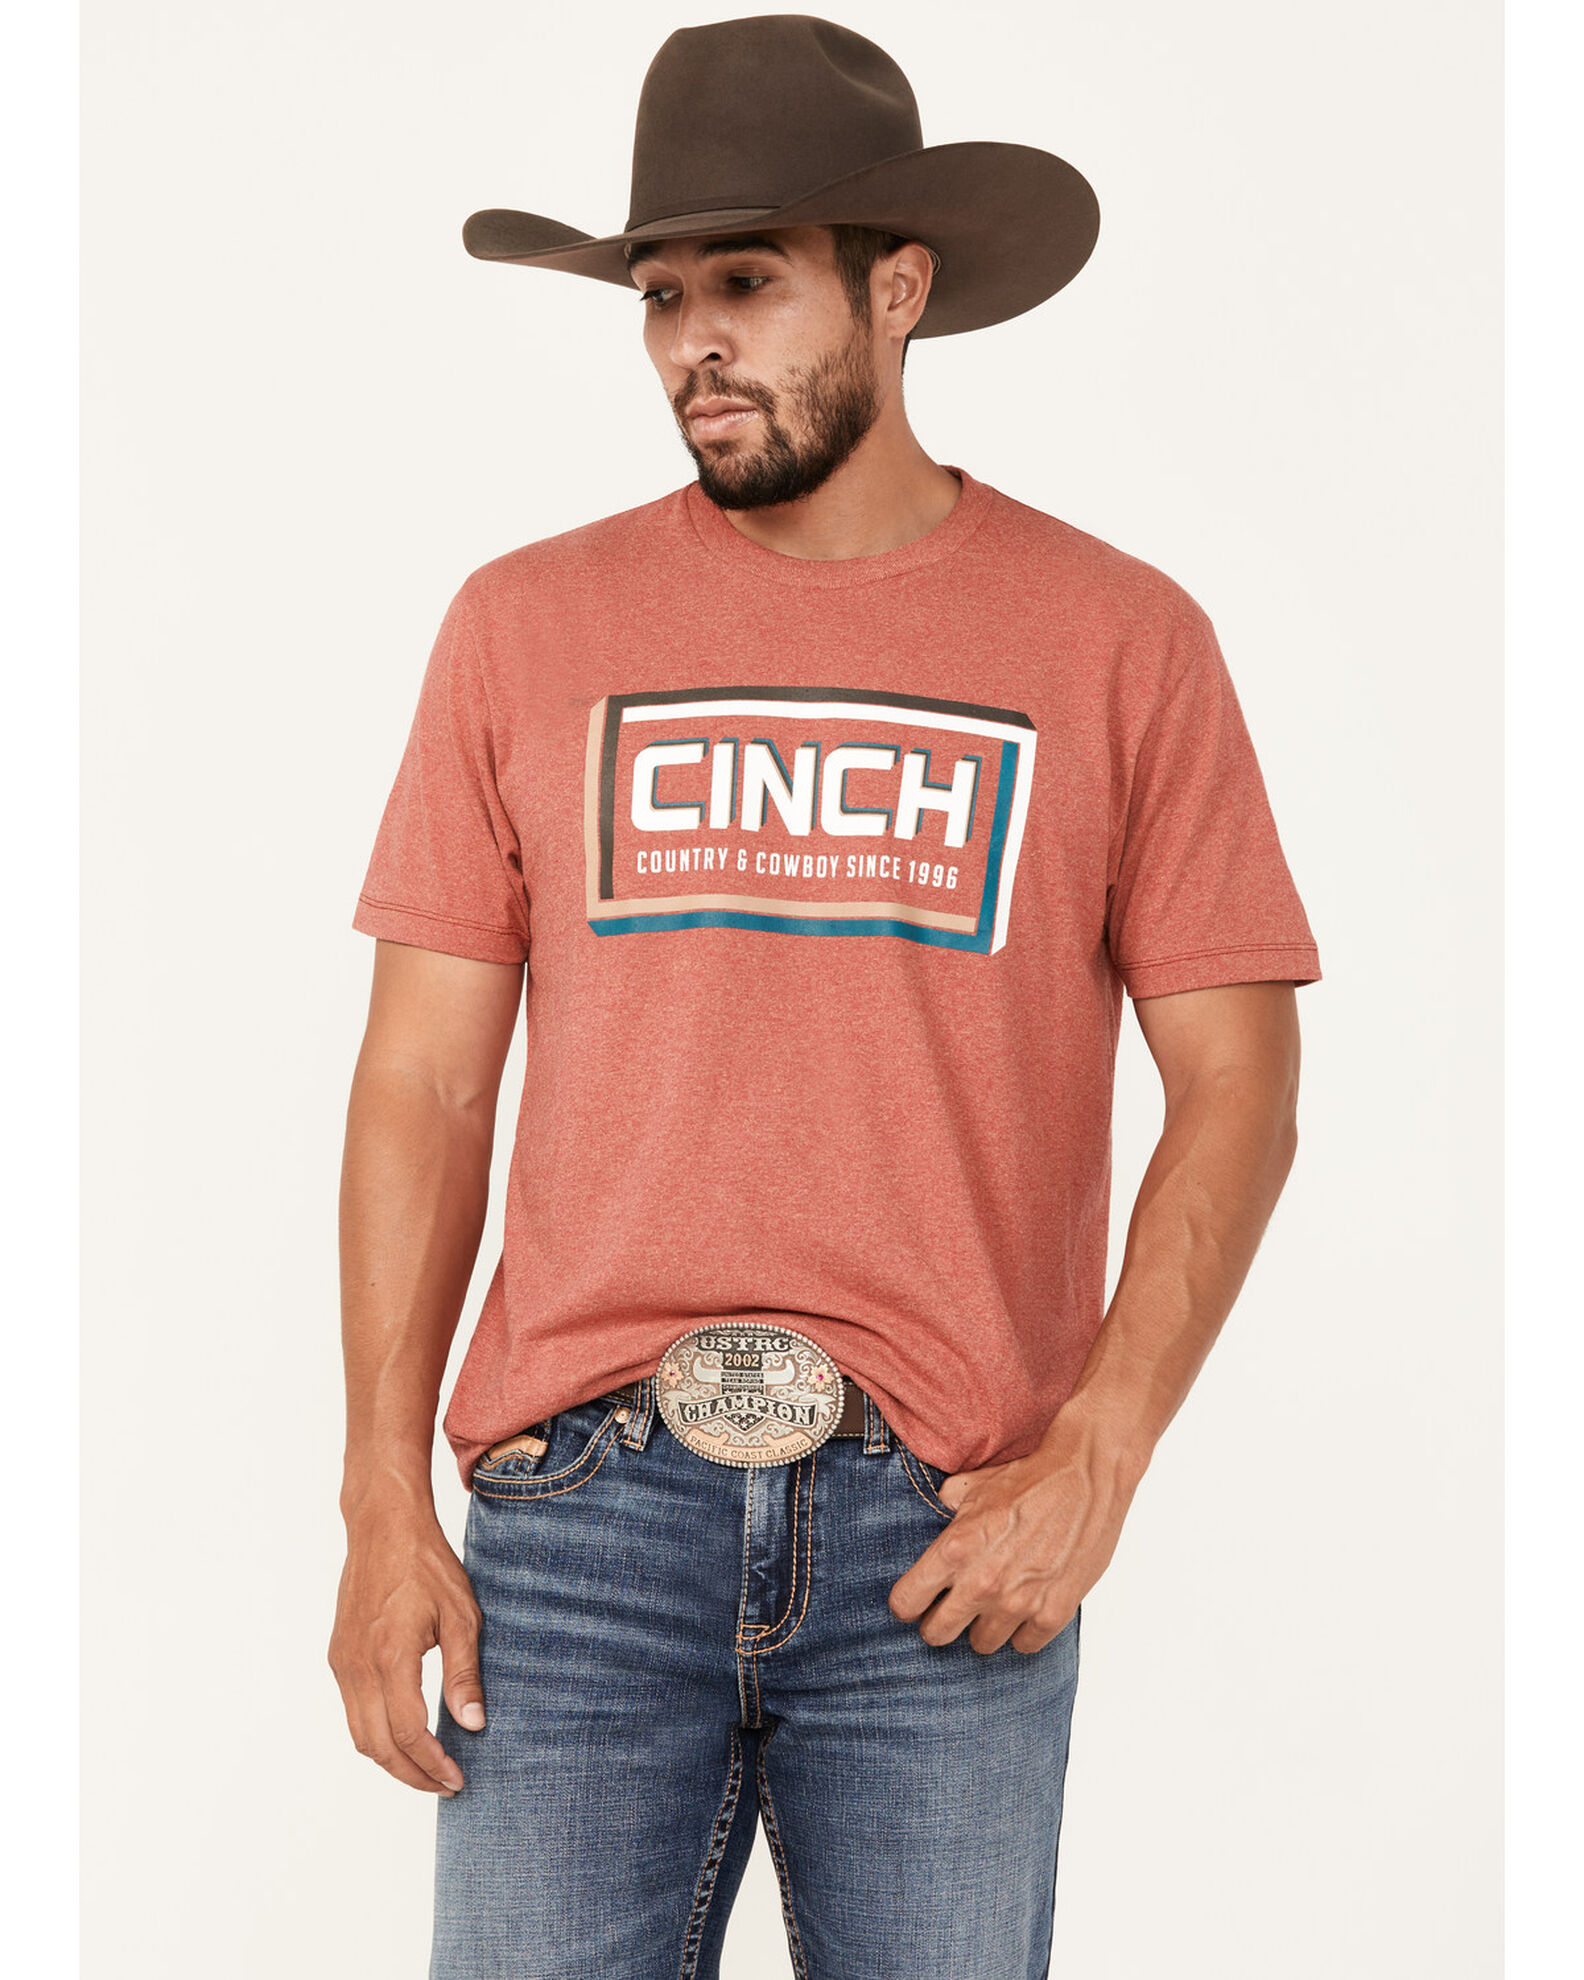 Cinch Men's Country & Cowboy Logo Short Sleeve Graphic T-Shirt